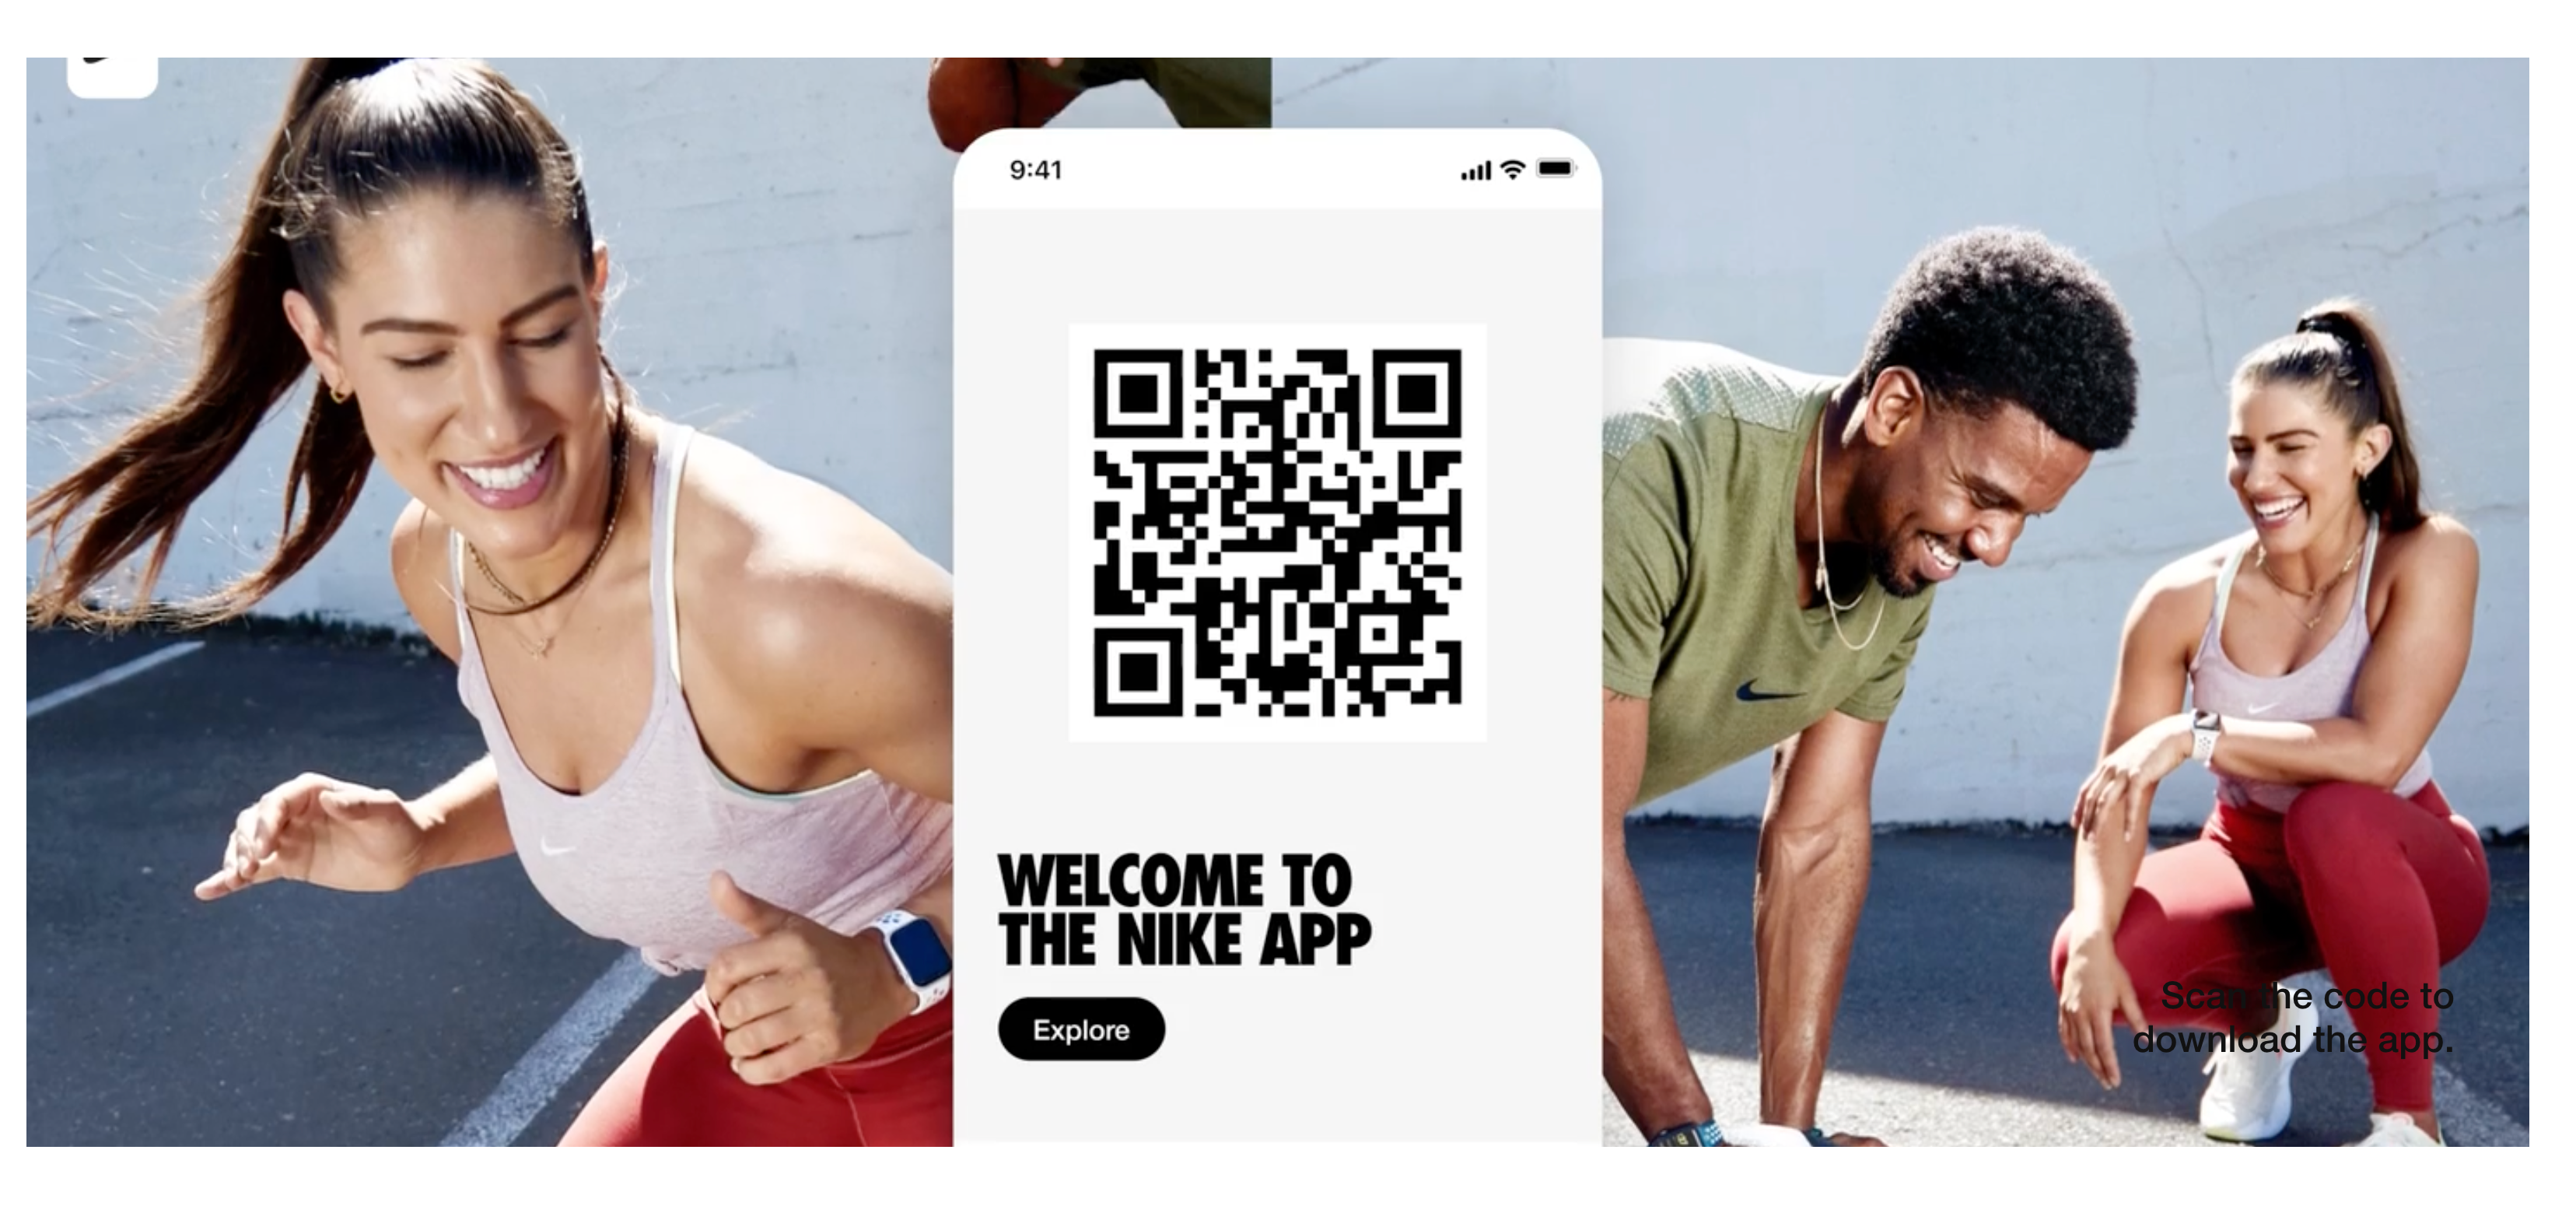 Nike gamification